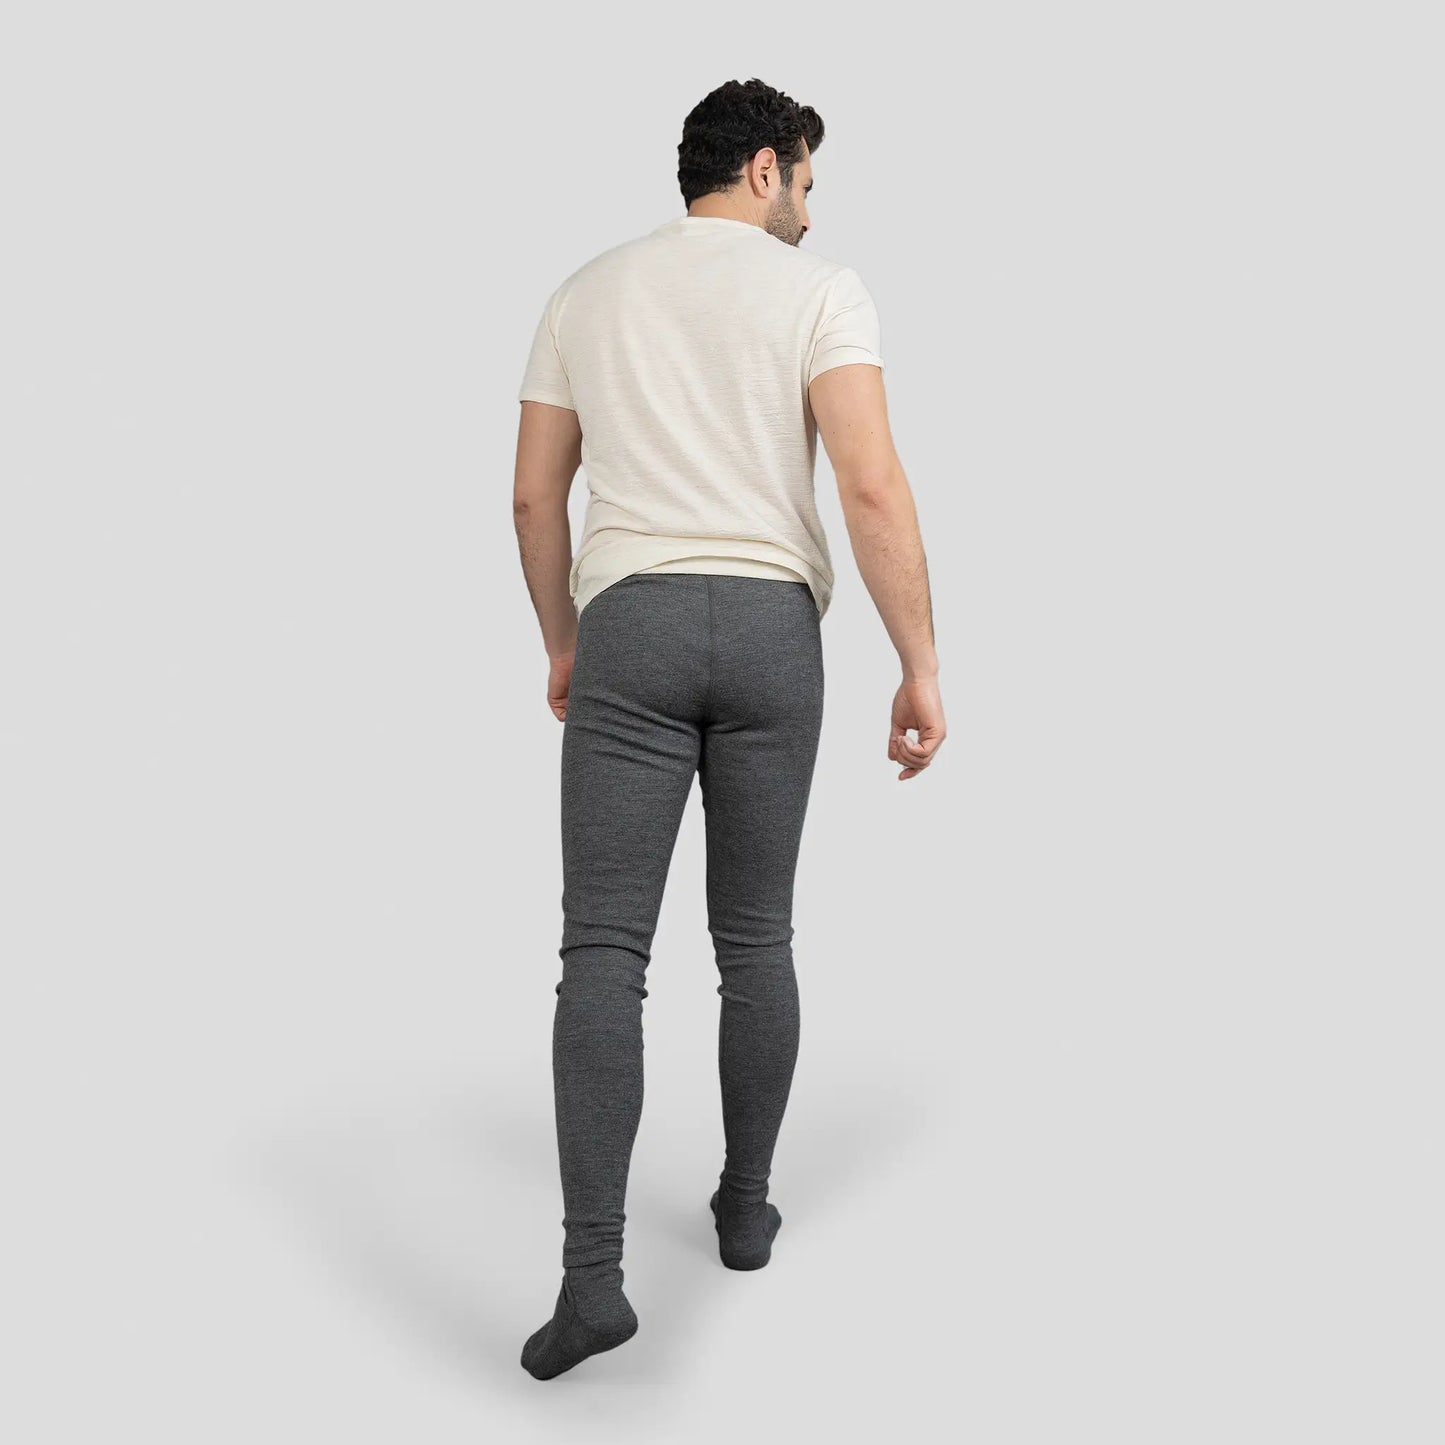 mens eco friendly leggings lightweight color gray